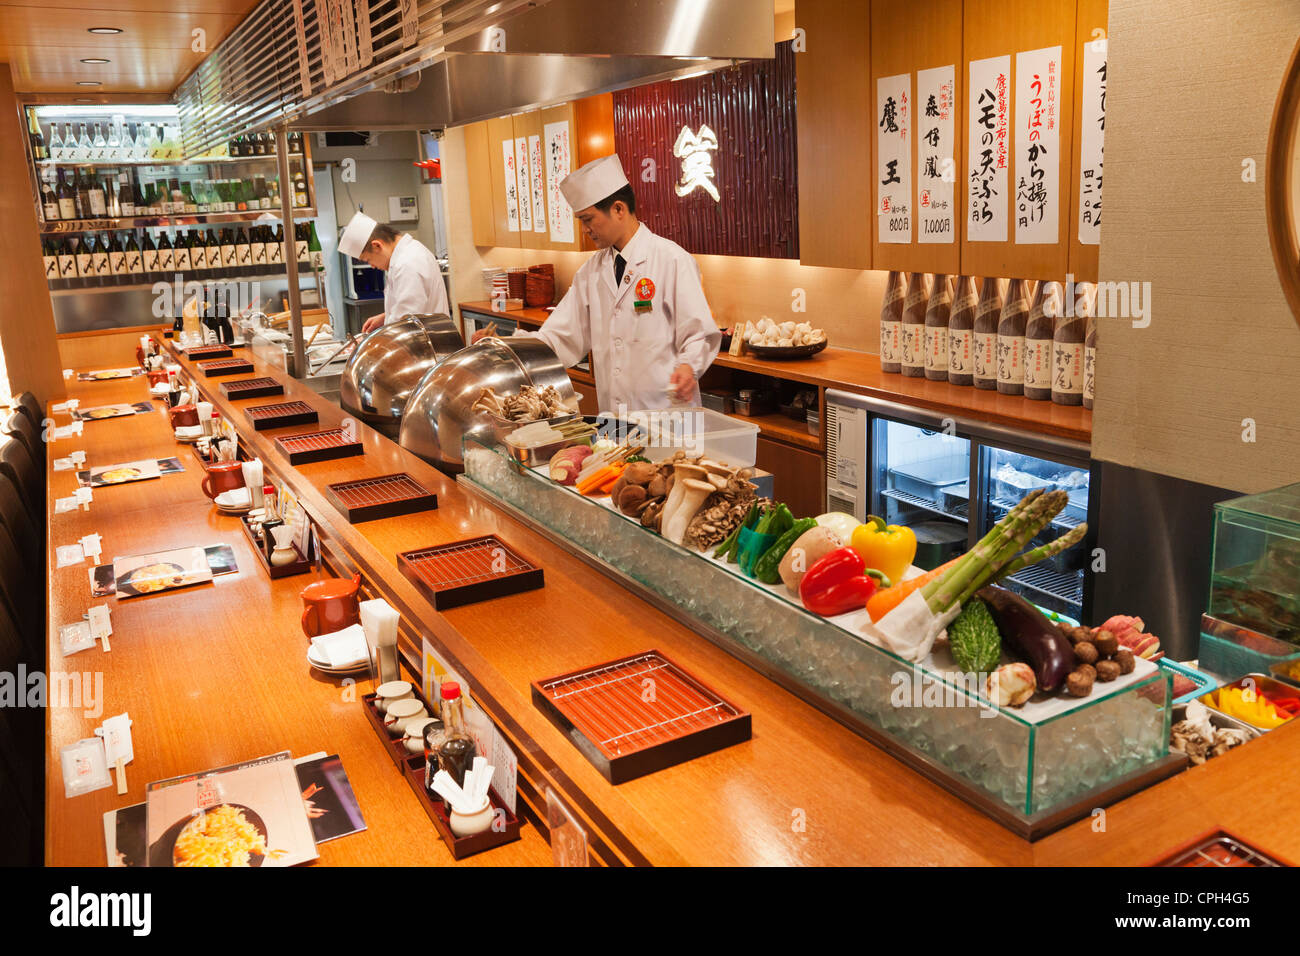 https://c8.alamy.com/comp/CPH4G5/asia-japan-tokyo-tempura-japanese-food-restaurant-restaurants-interior-CPH4G5.jpg